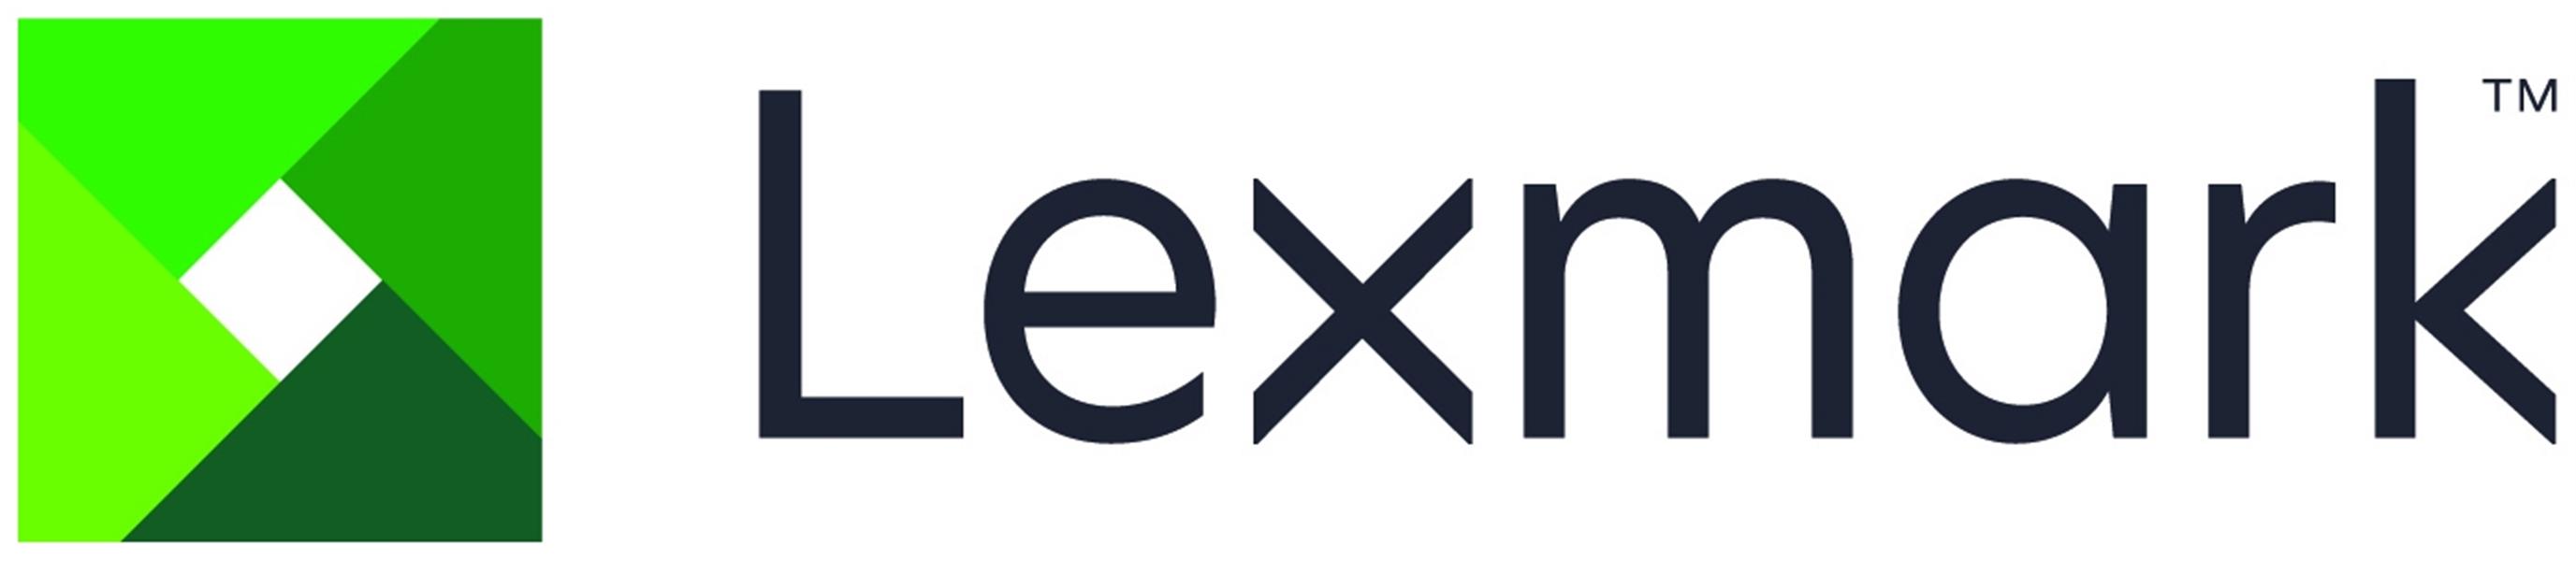 LEXMARK XC9265 Full 4yExtended Guarantee